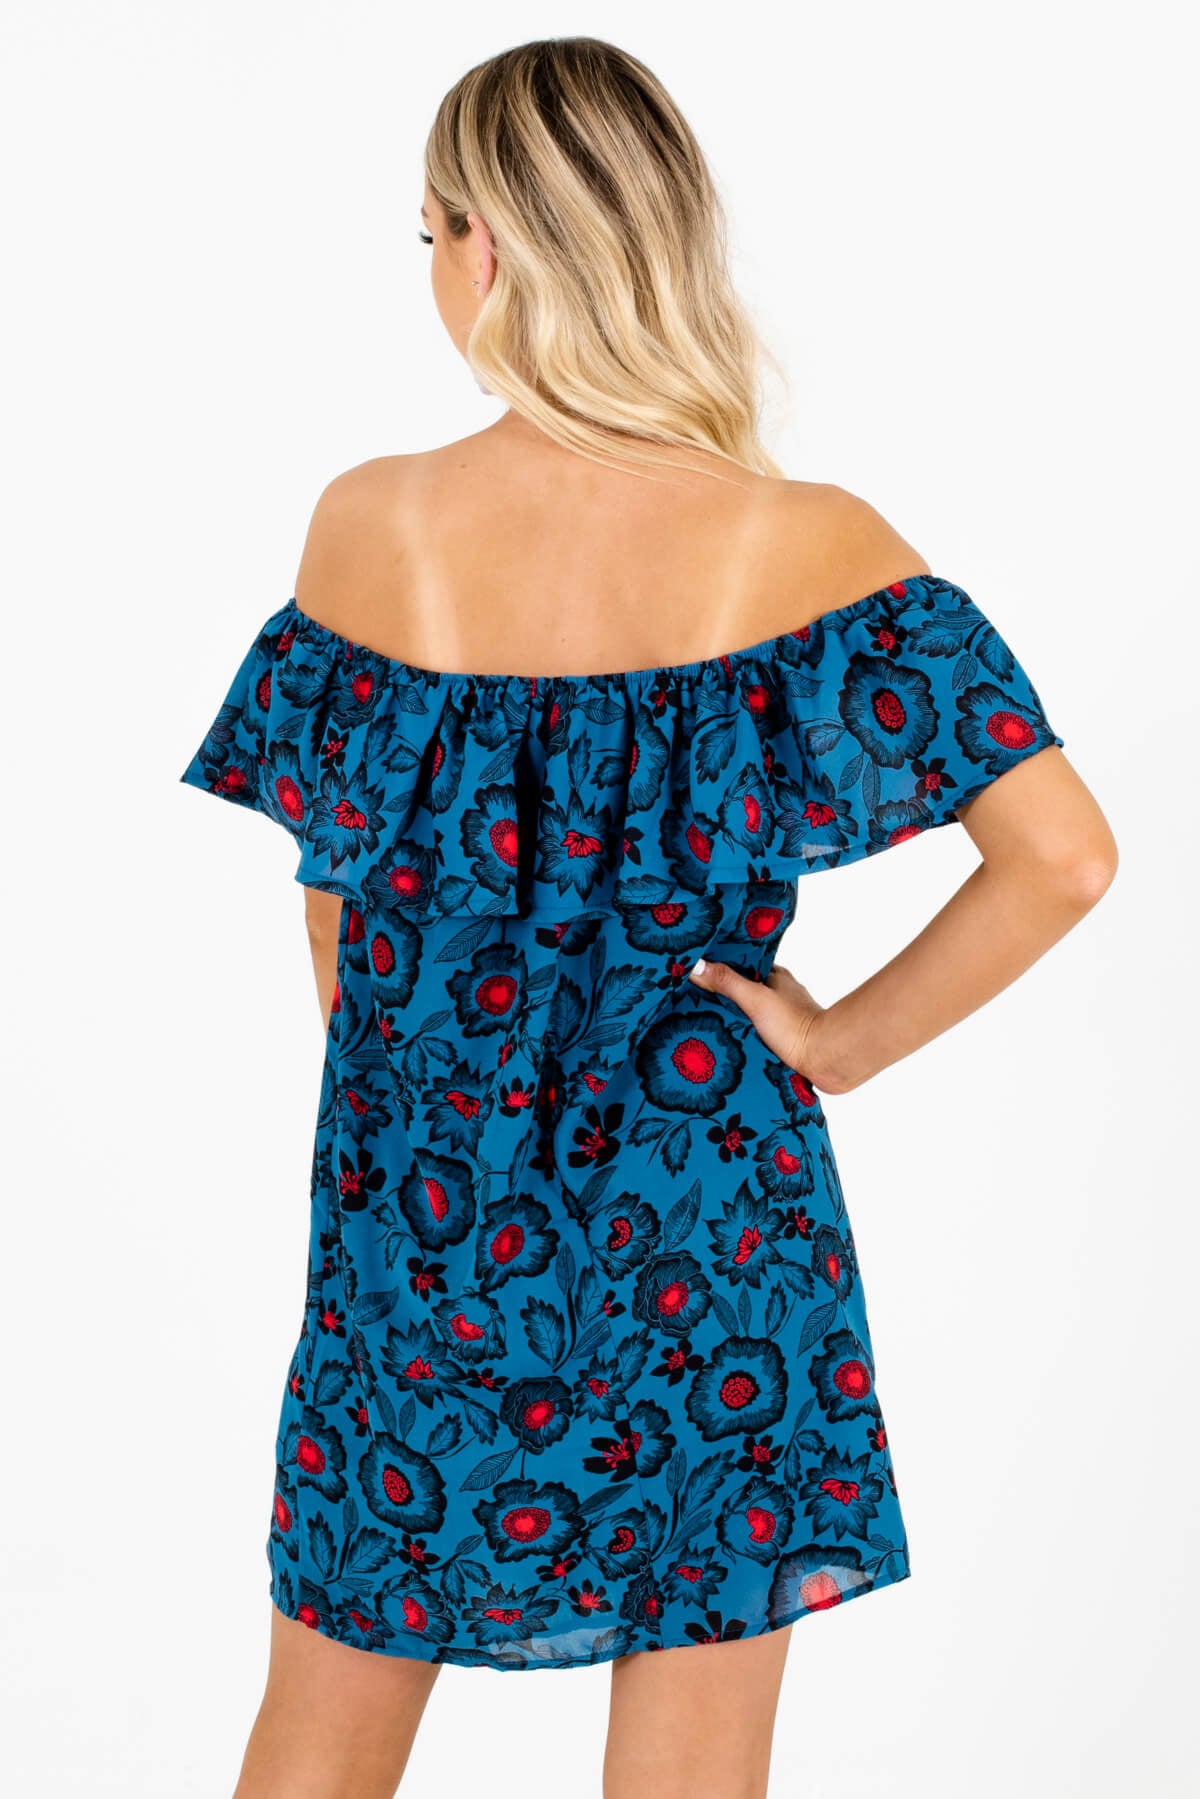 Women's Teal Blue Ruffle Overlay Boutique Mini Dress